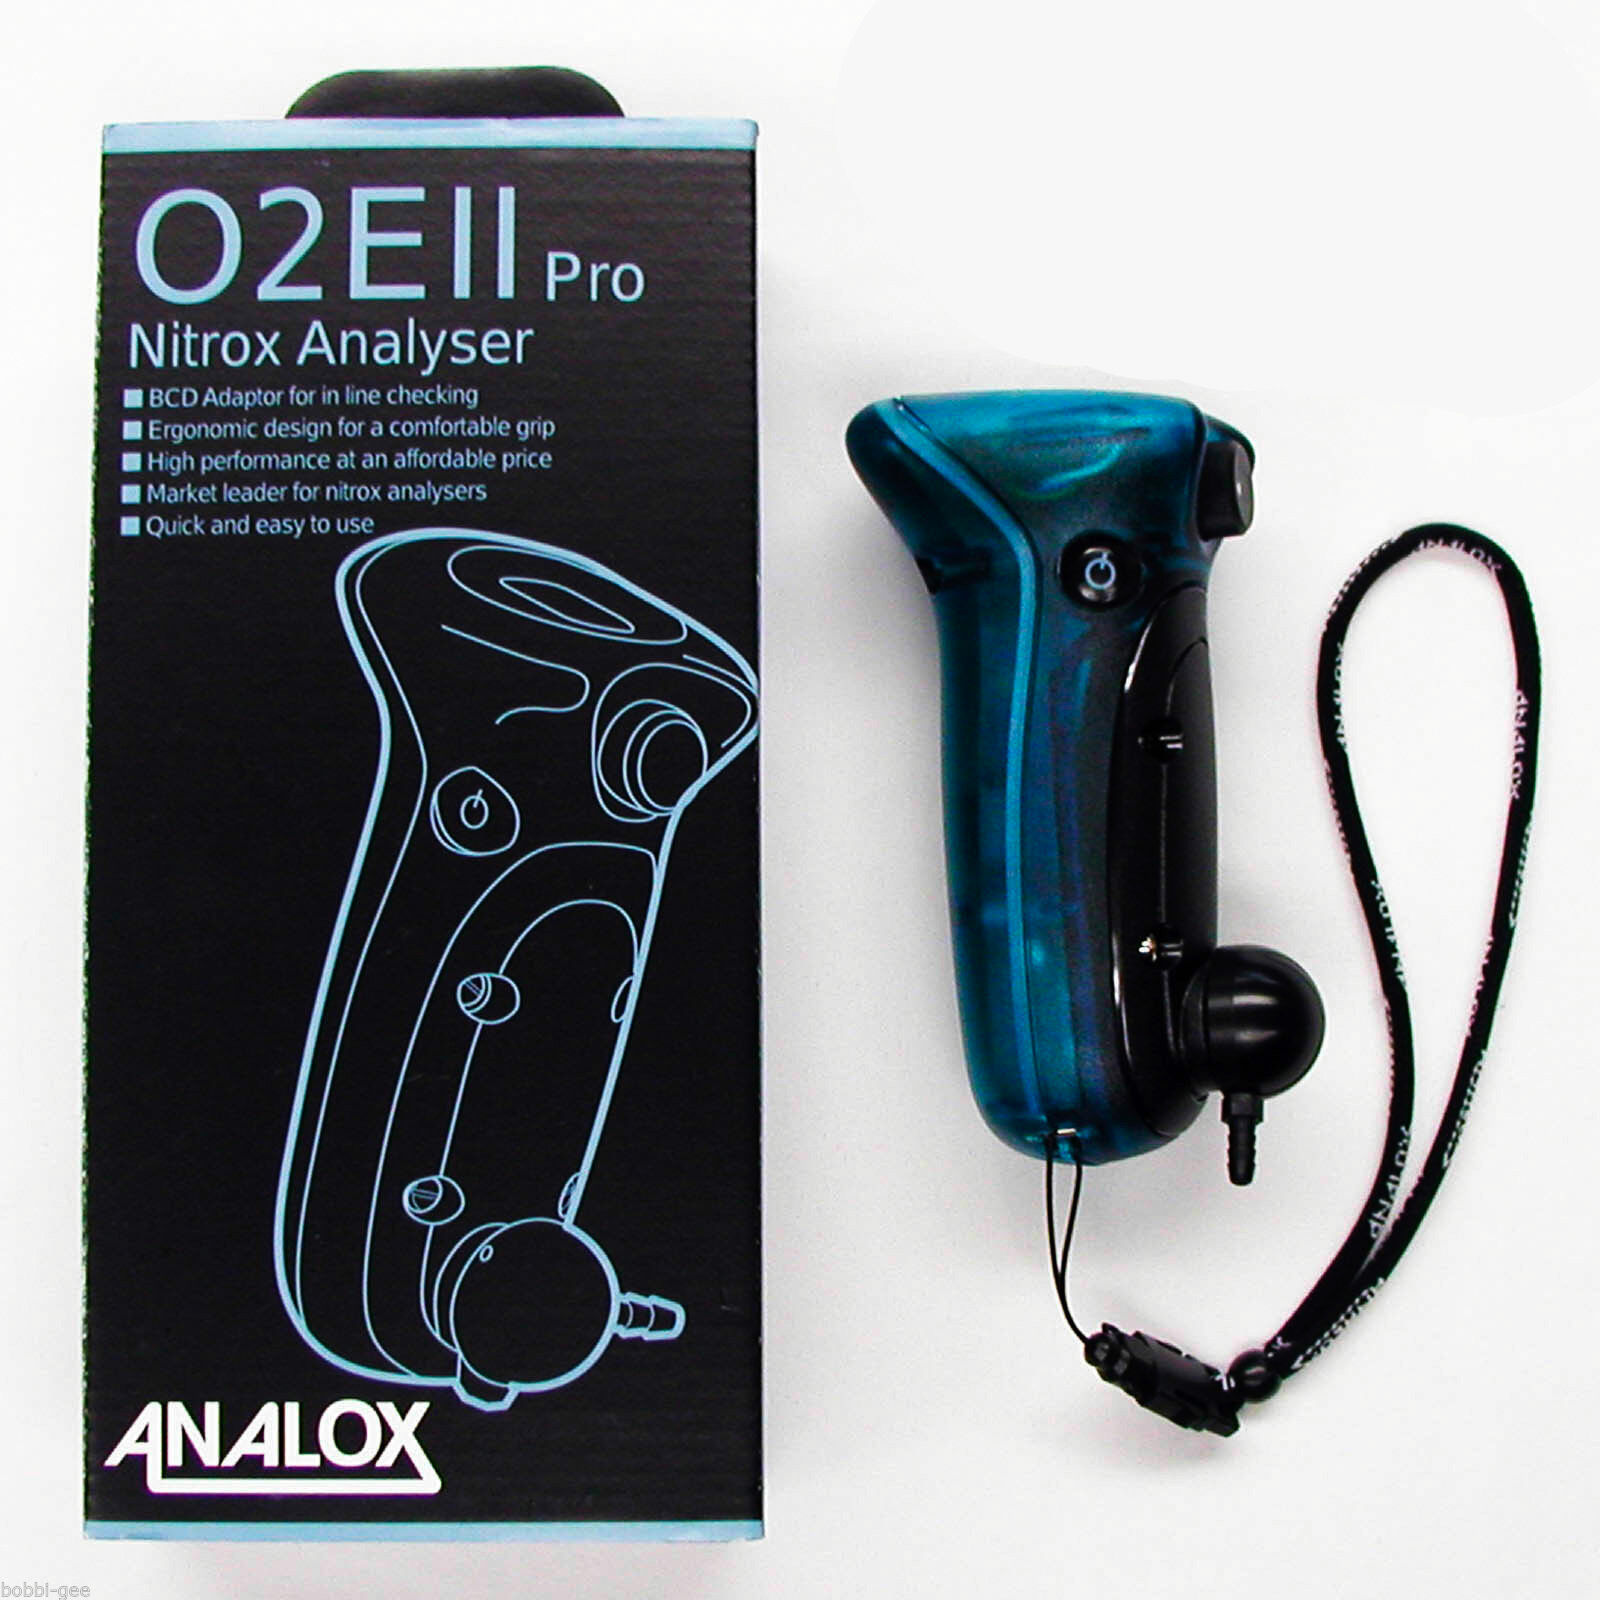 Analox O2eil Pro Analyzer For Enriched Air Nitrox Scuba - Newest Sensor Avail